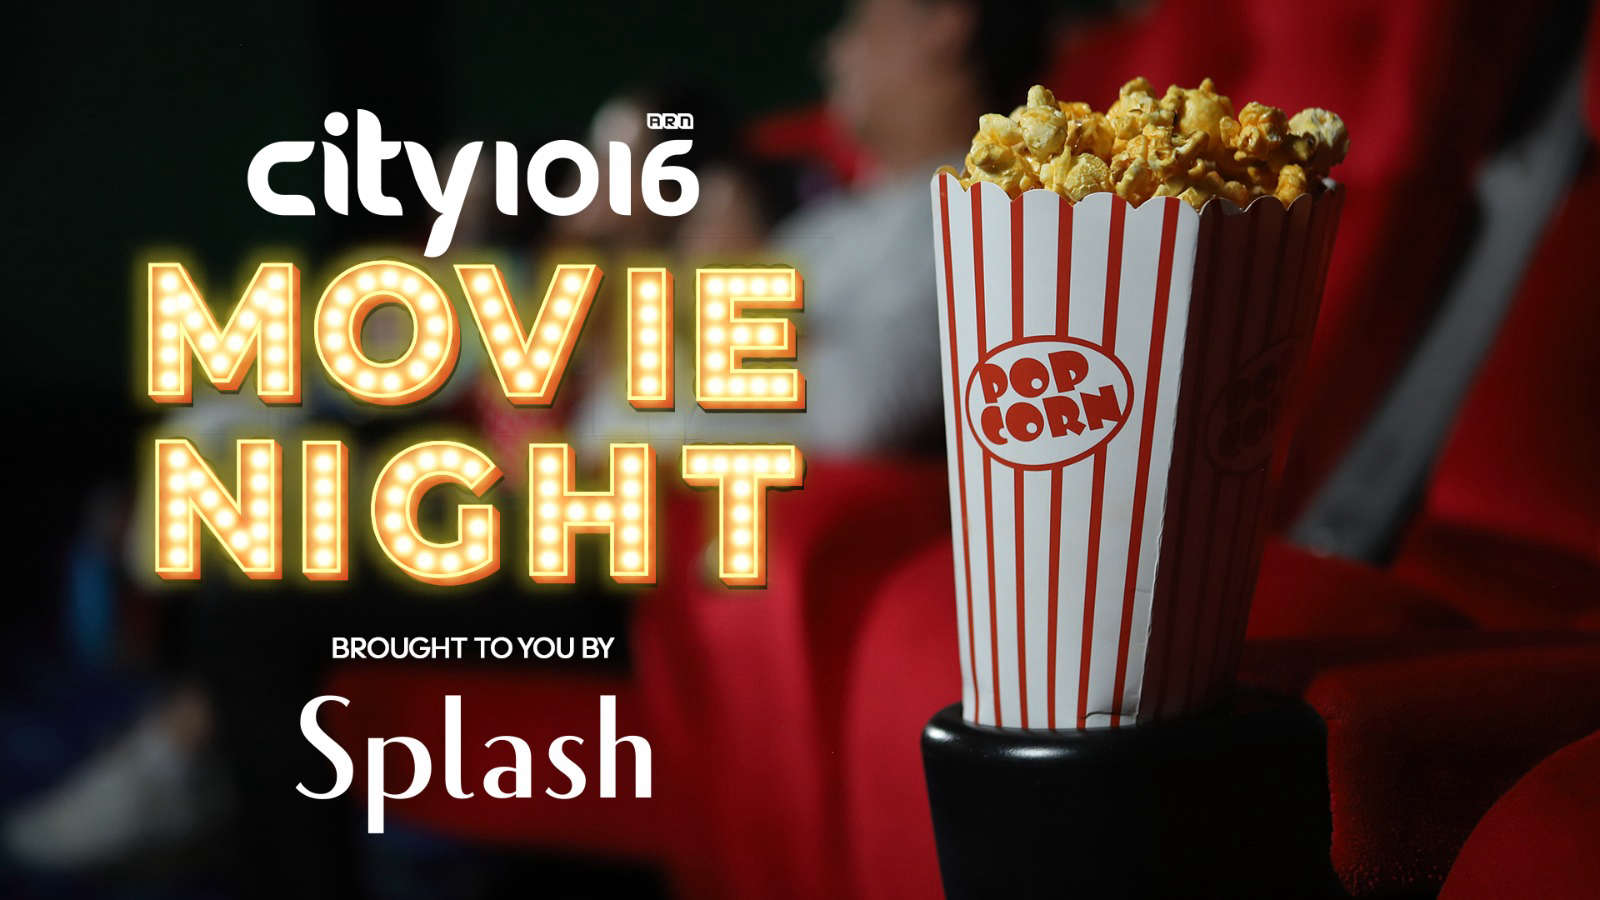 SPLASH City101.6 Movie Nights